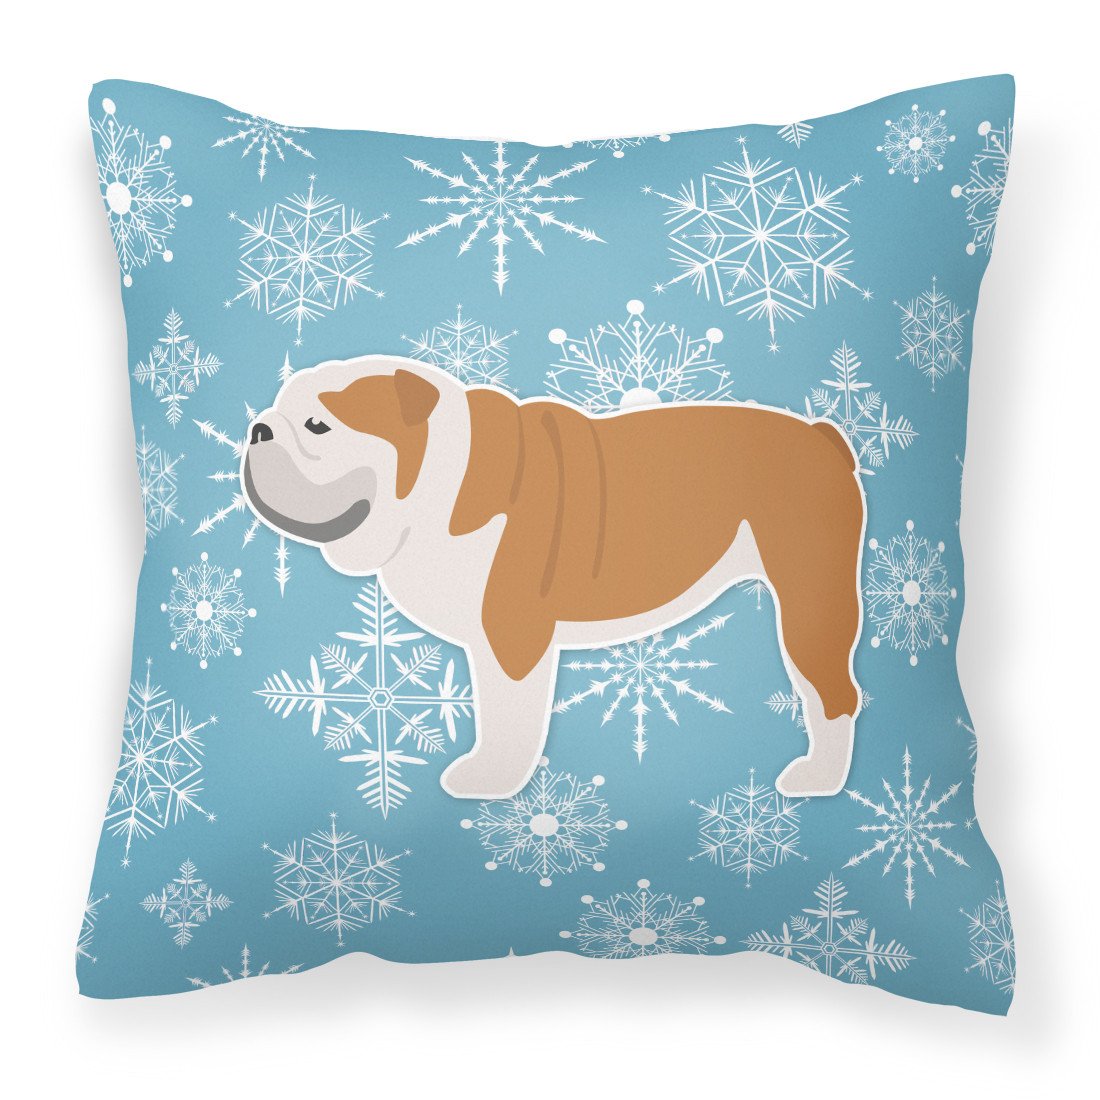 Winter Snowflake English Bulldog Fabric Decorative Pillow BB3562PW1818 by Caroline's Treasures